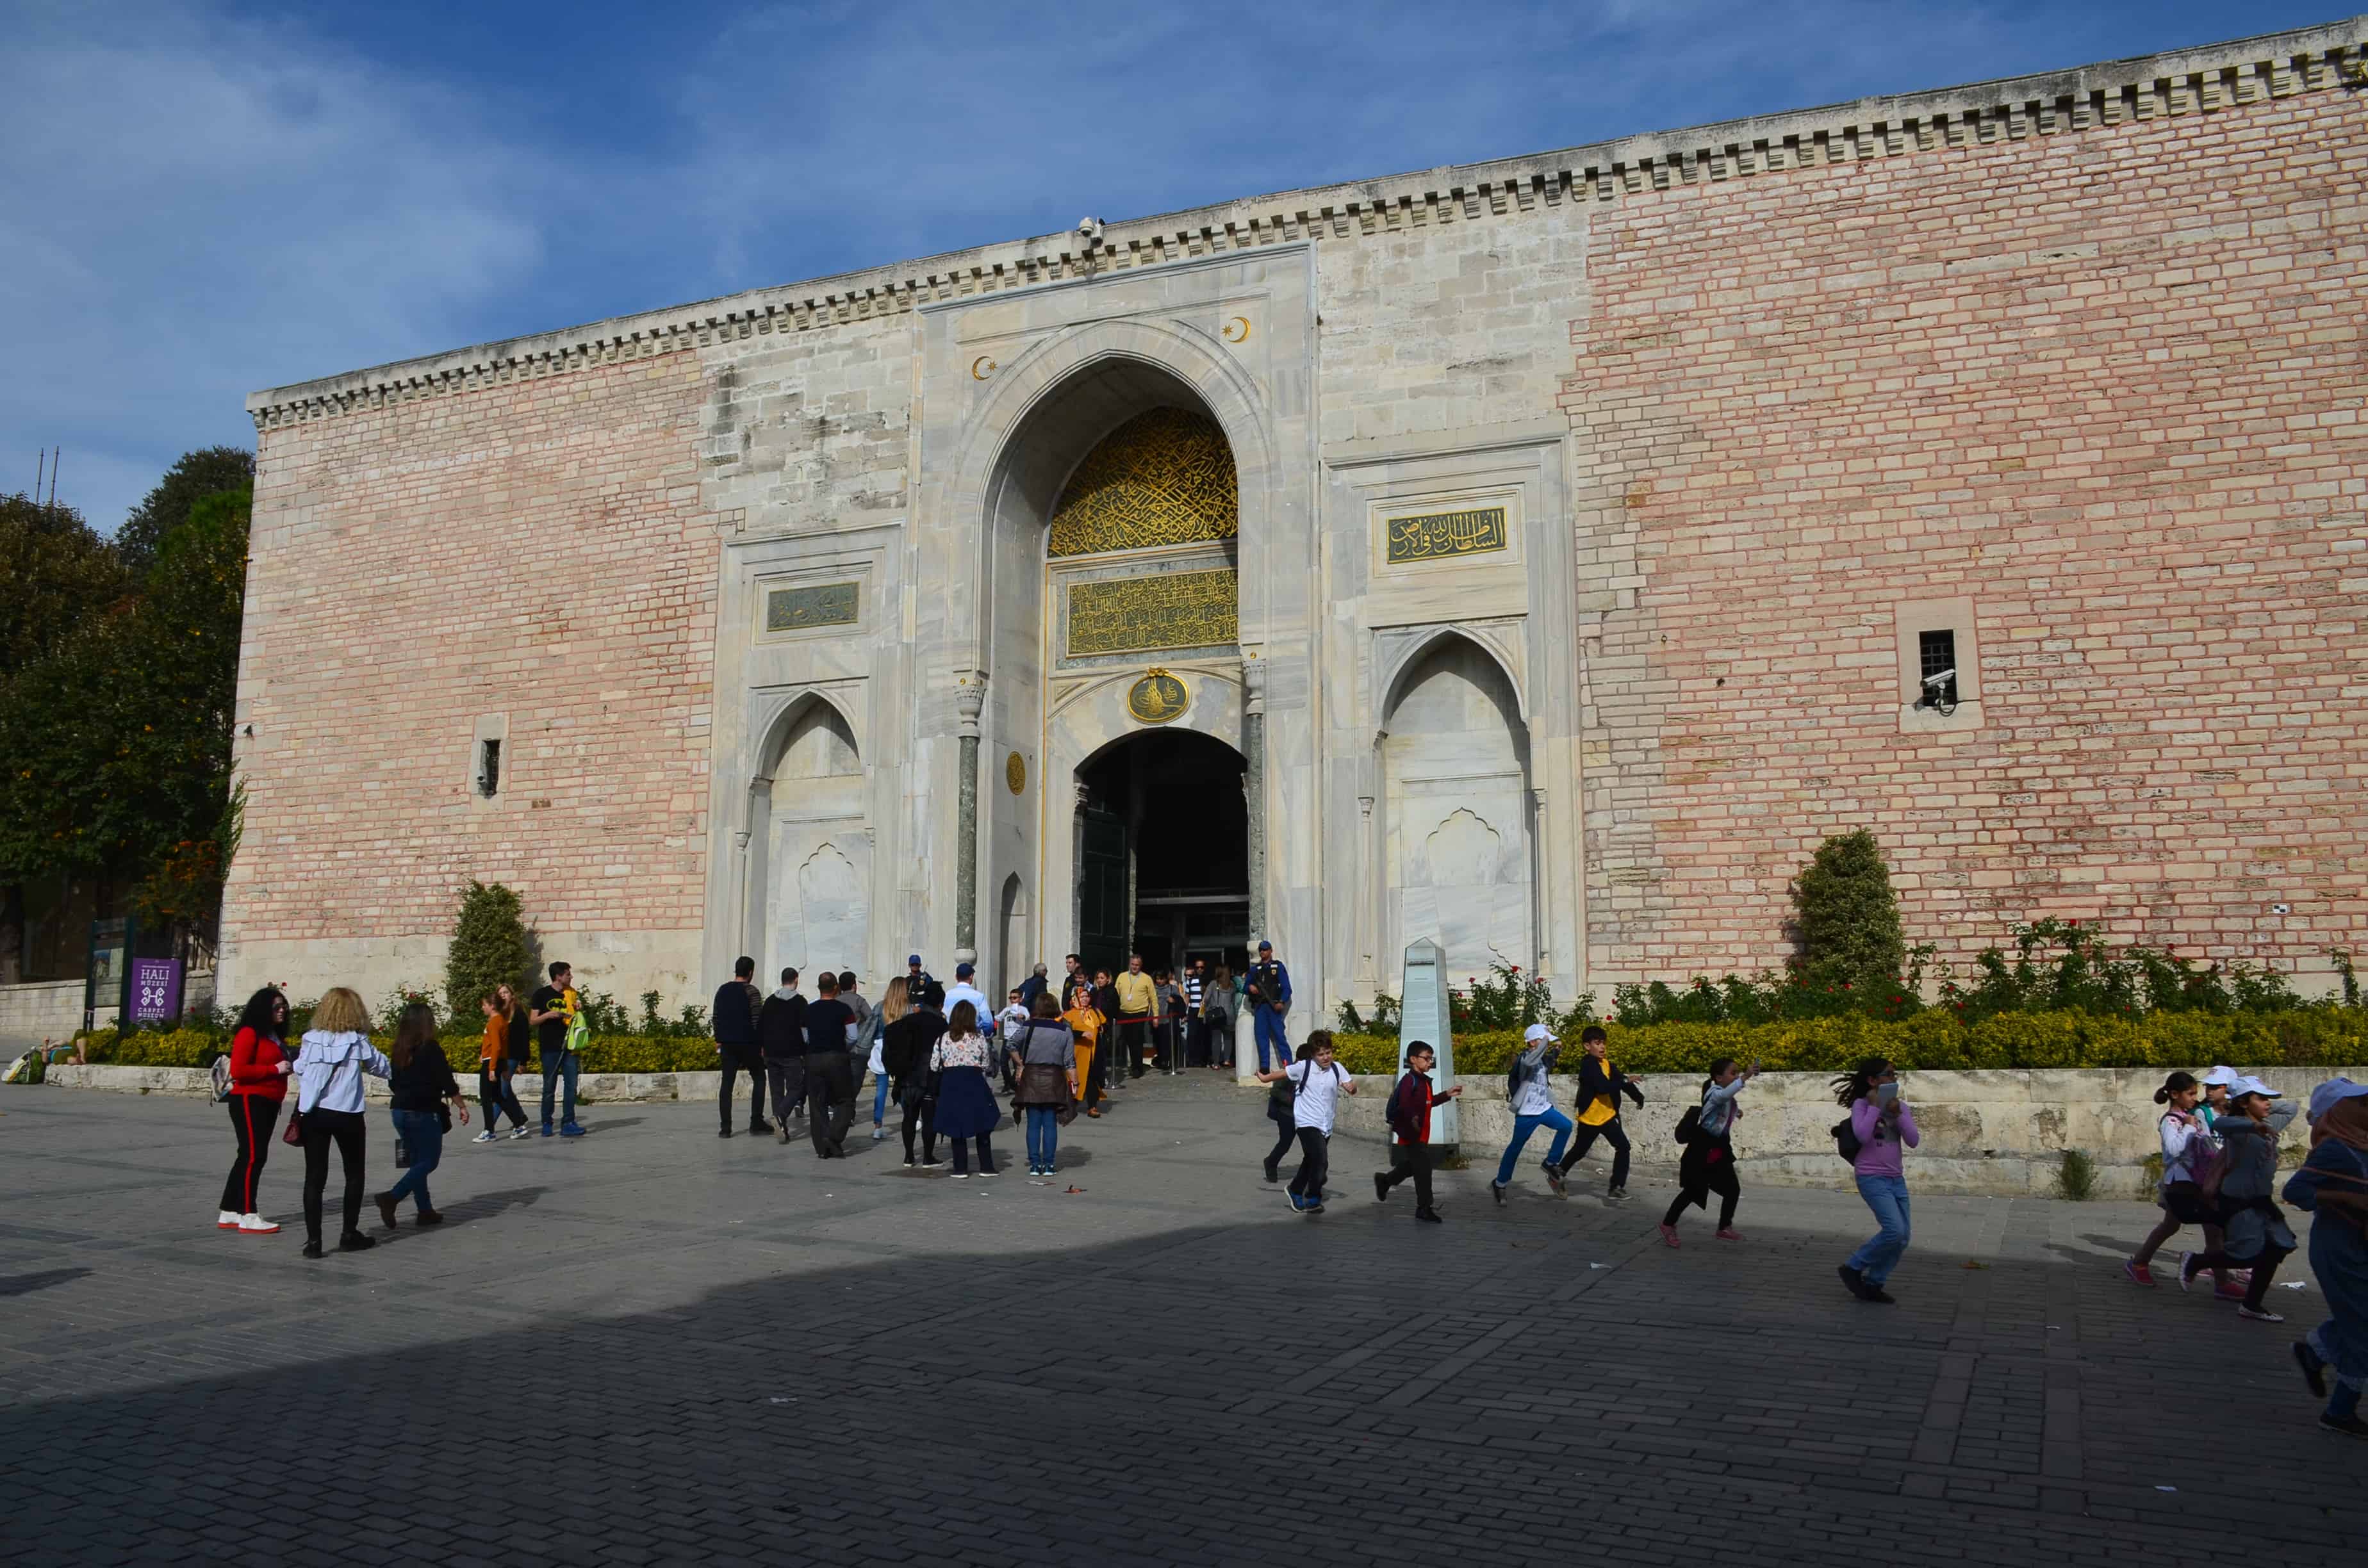 Imperial Gate of Topkapi Palace in Istanbul, Turkey